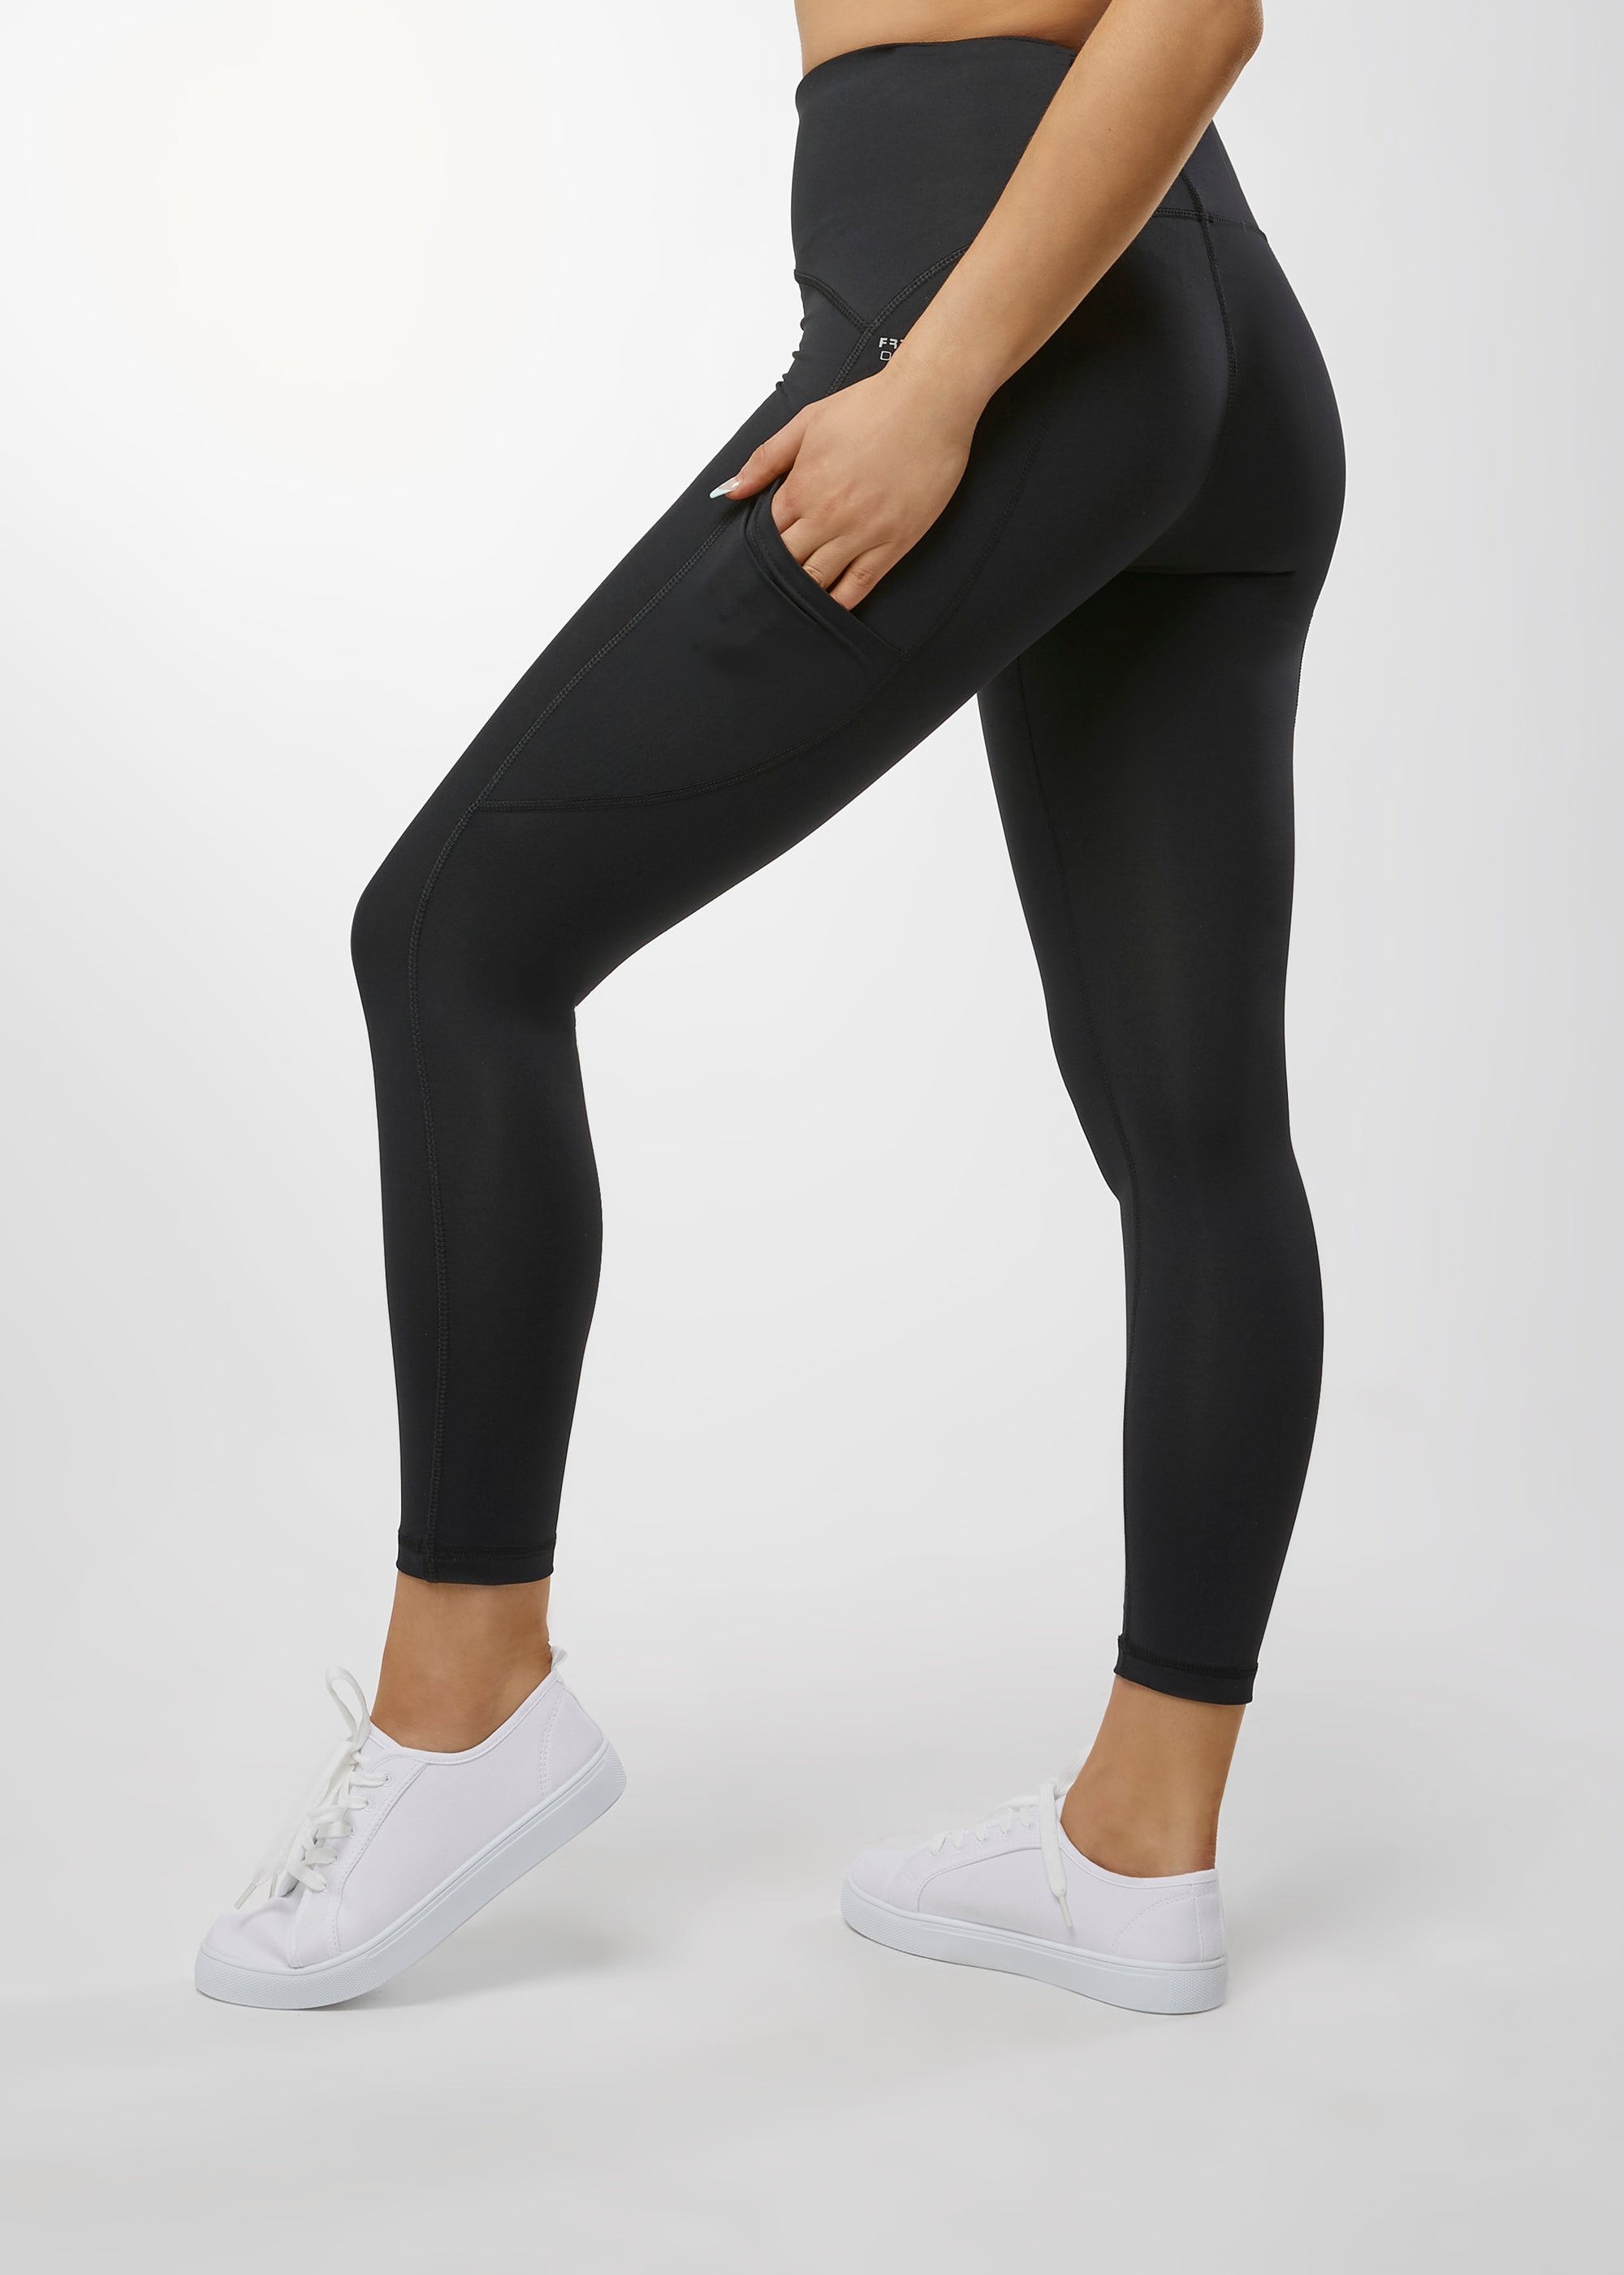 Gisele - Plain Black Comfort Fit 7/8 Middi Legging (High-Waist